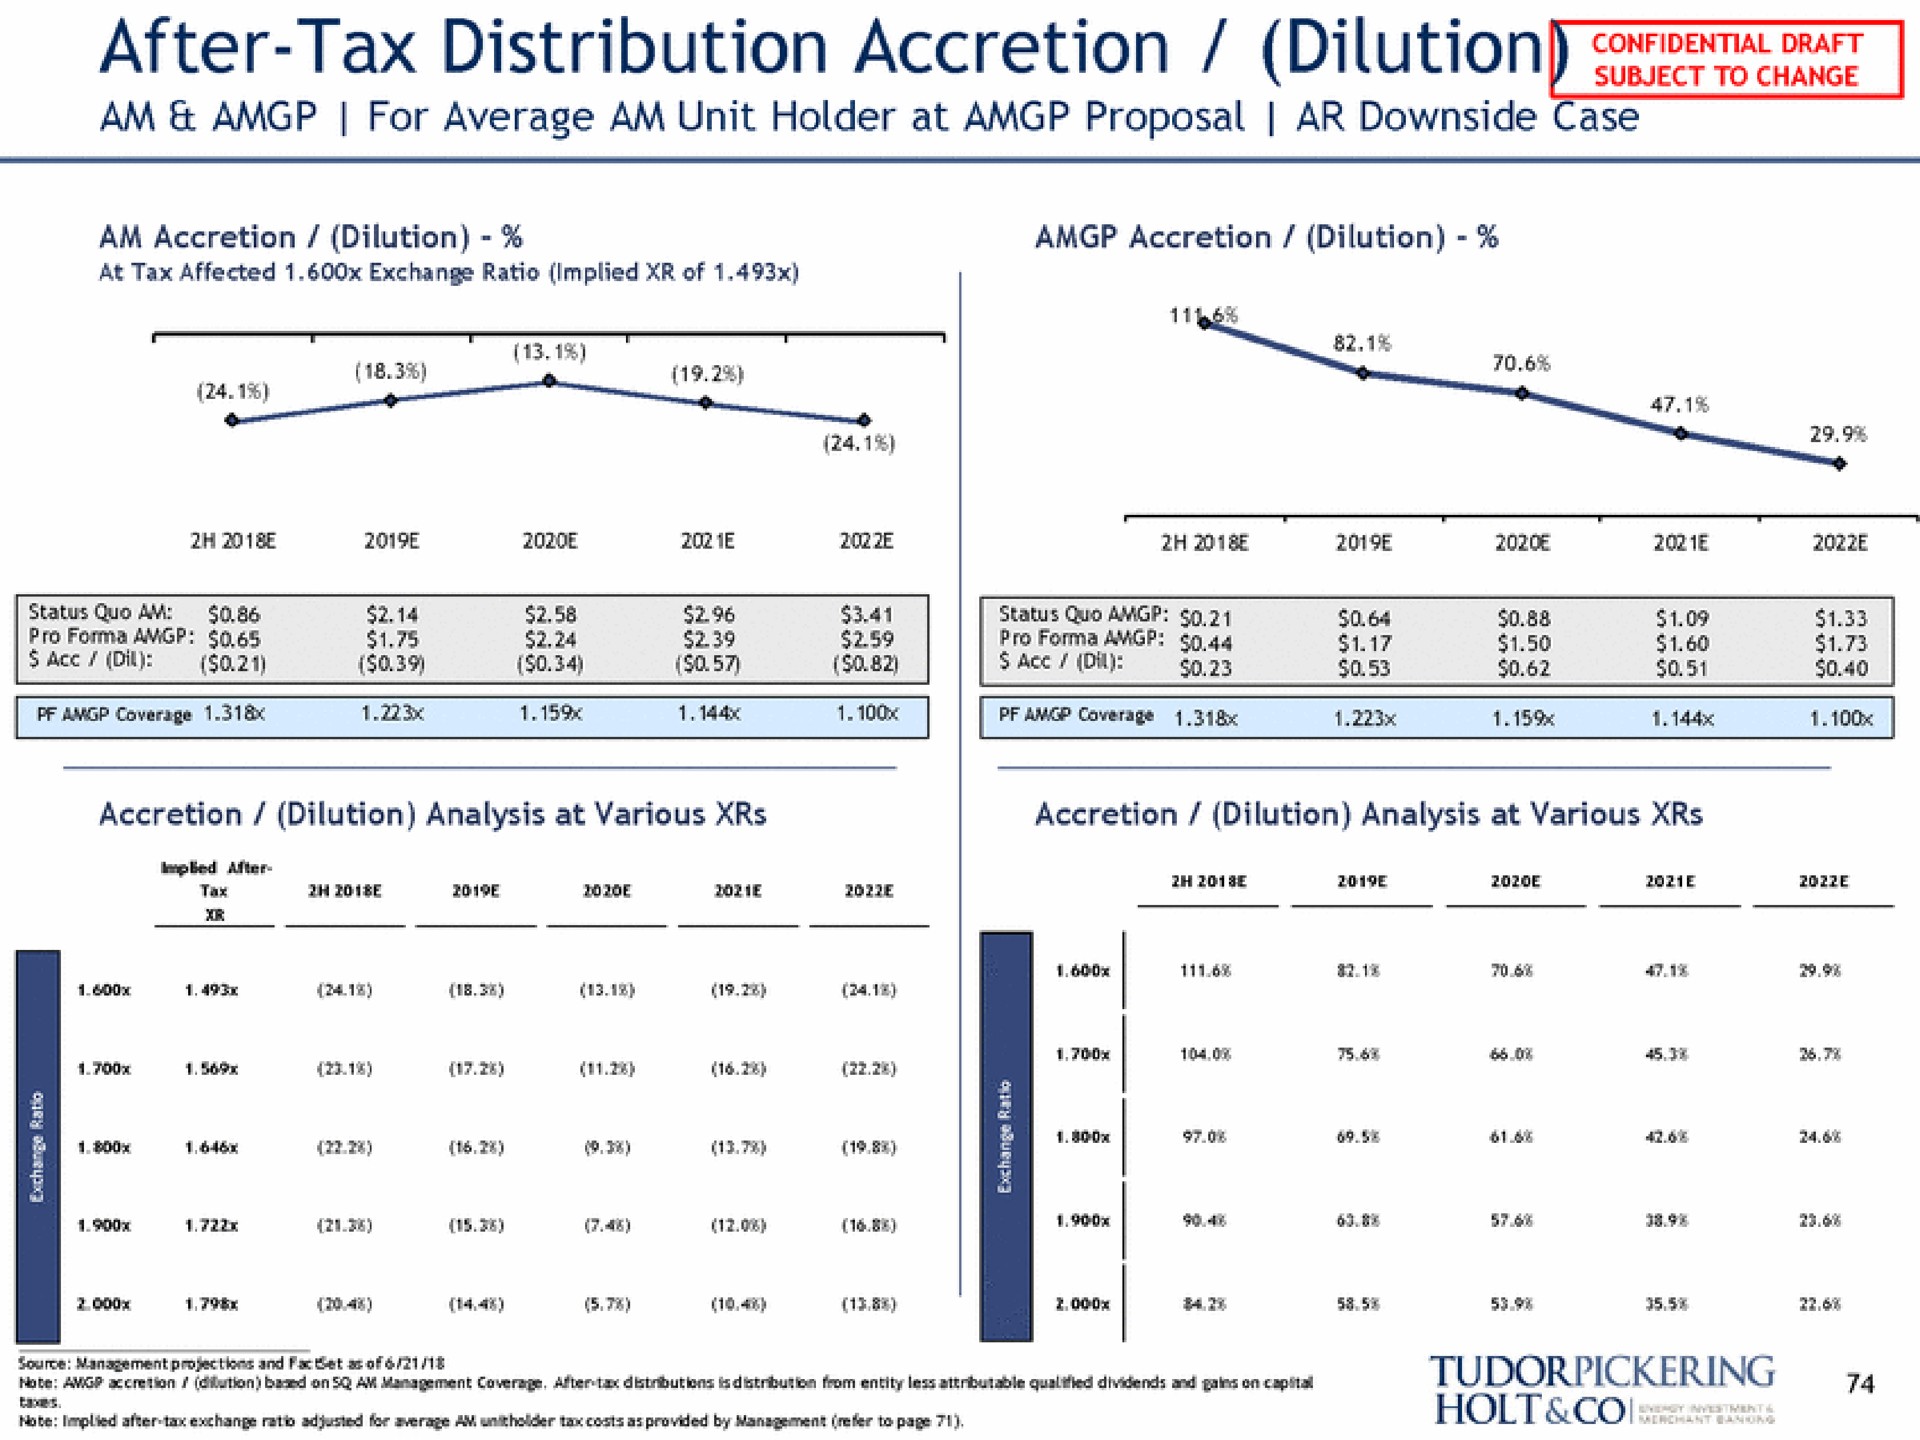 after tax distribution accretion dilution parr am for average am unit holder at proposal downside case | Tudor, Pickering, Holt & Co